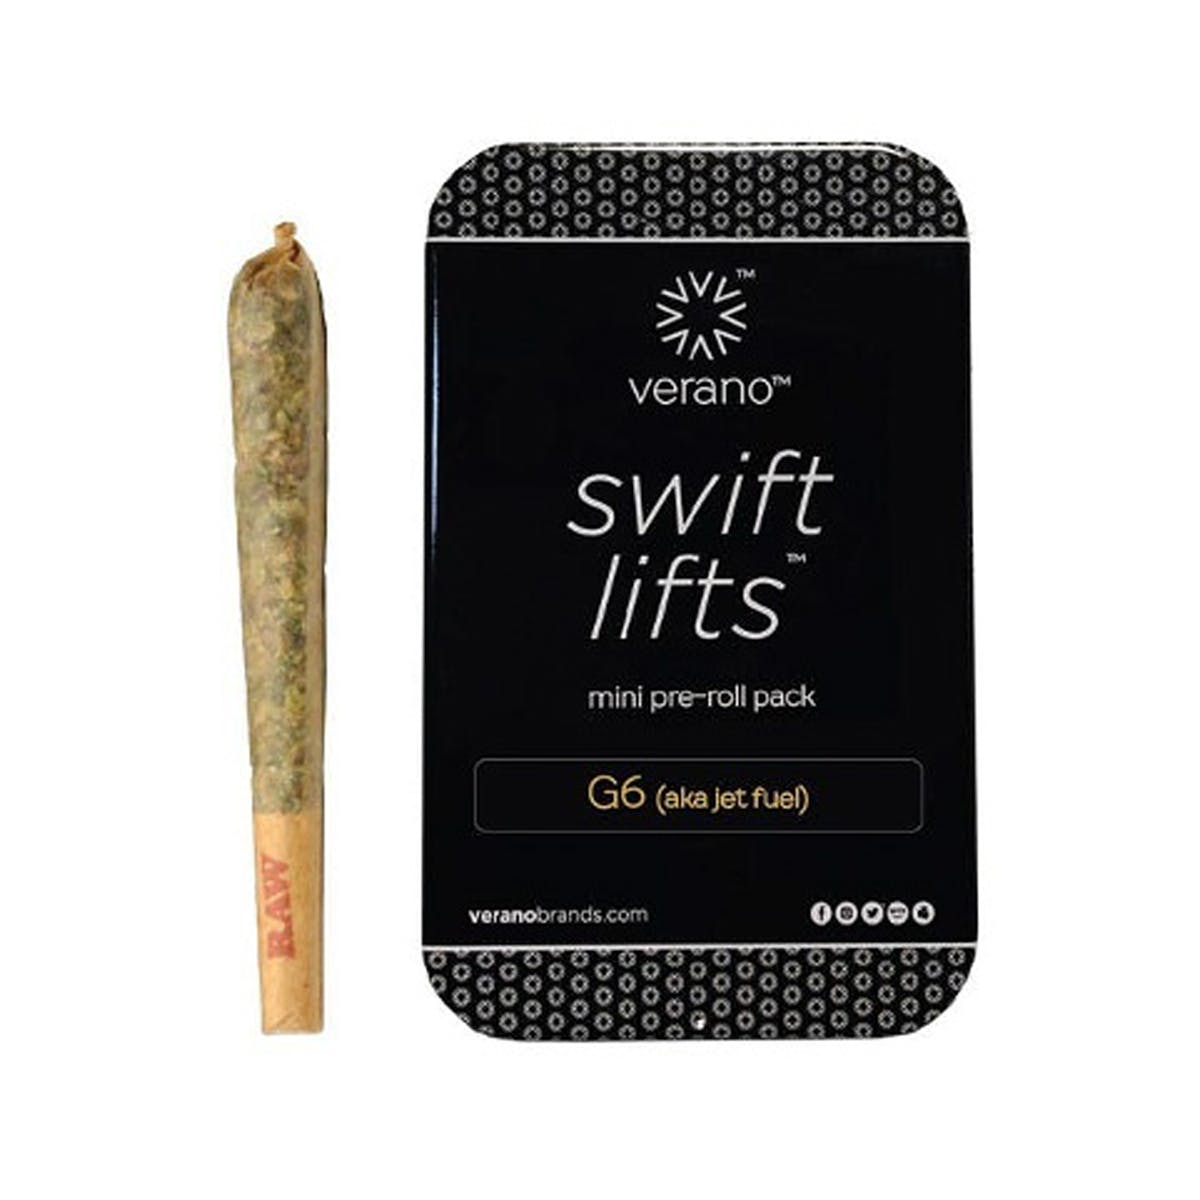 marijuana-dispensaries-culta-in-baltimore-swift-liftsa-c2-84c-mini-pre-roll-pack-g6-jet-fuel